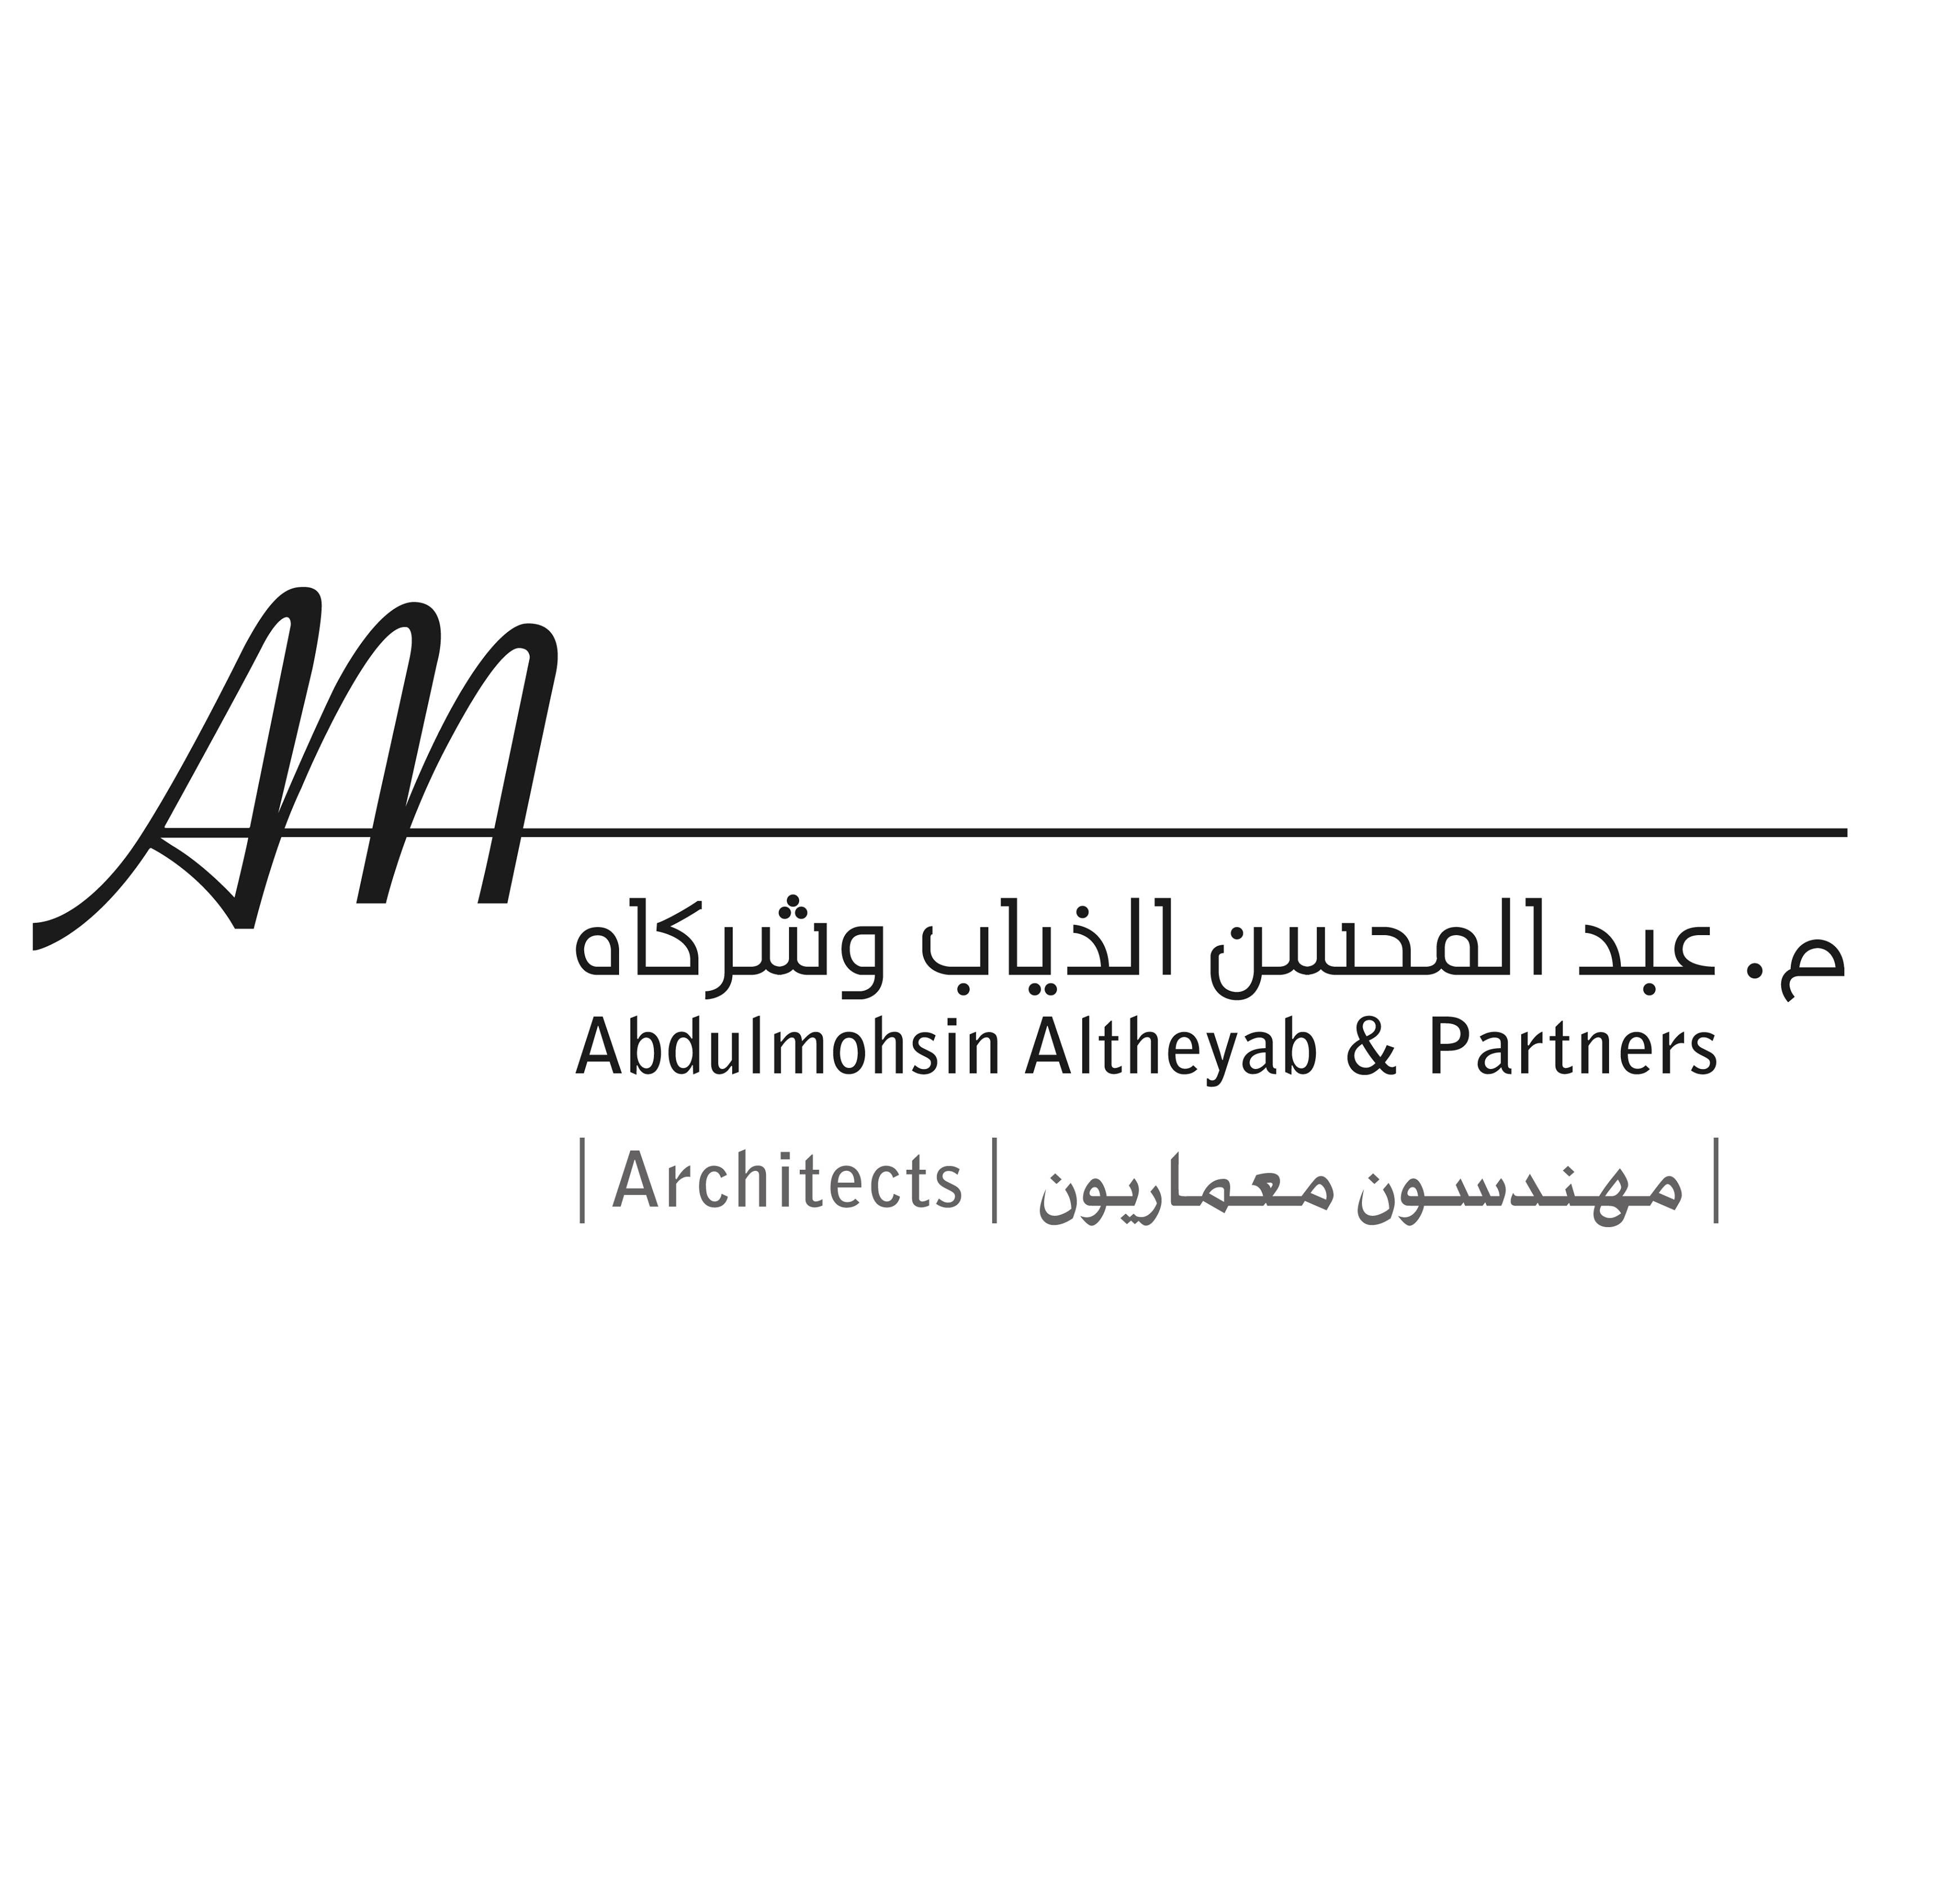 Abdulmohsin Altheyab & Partners